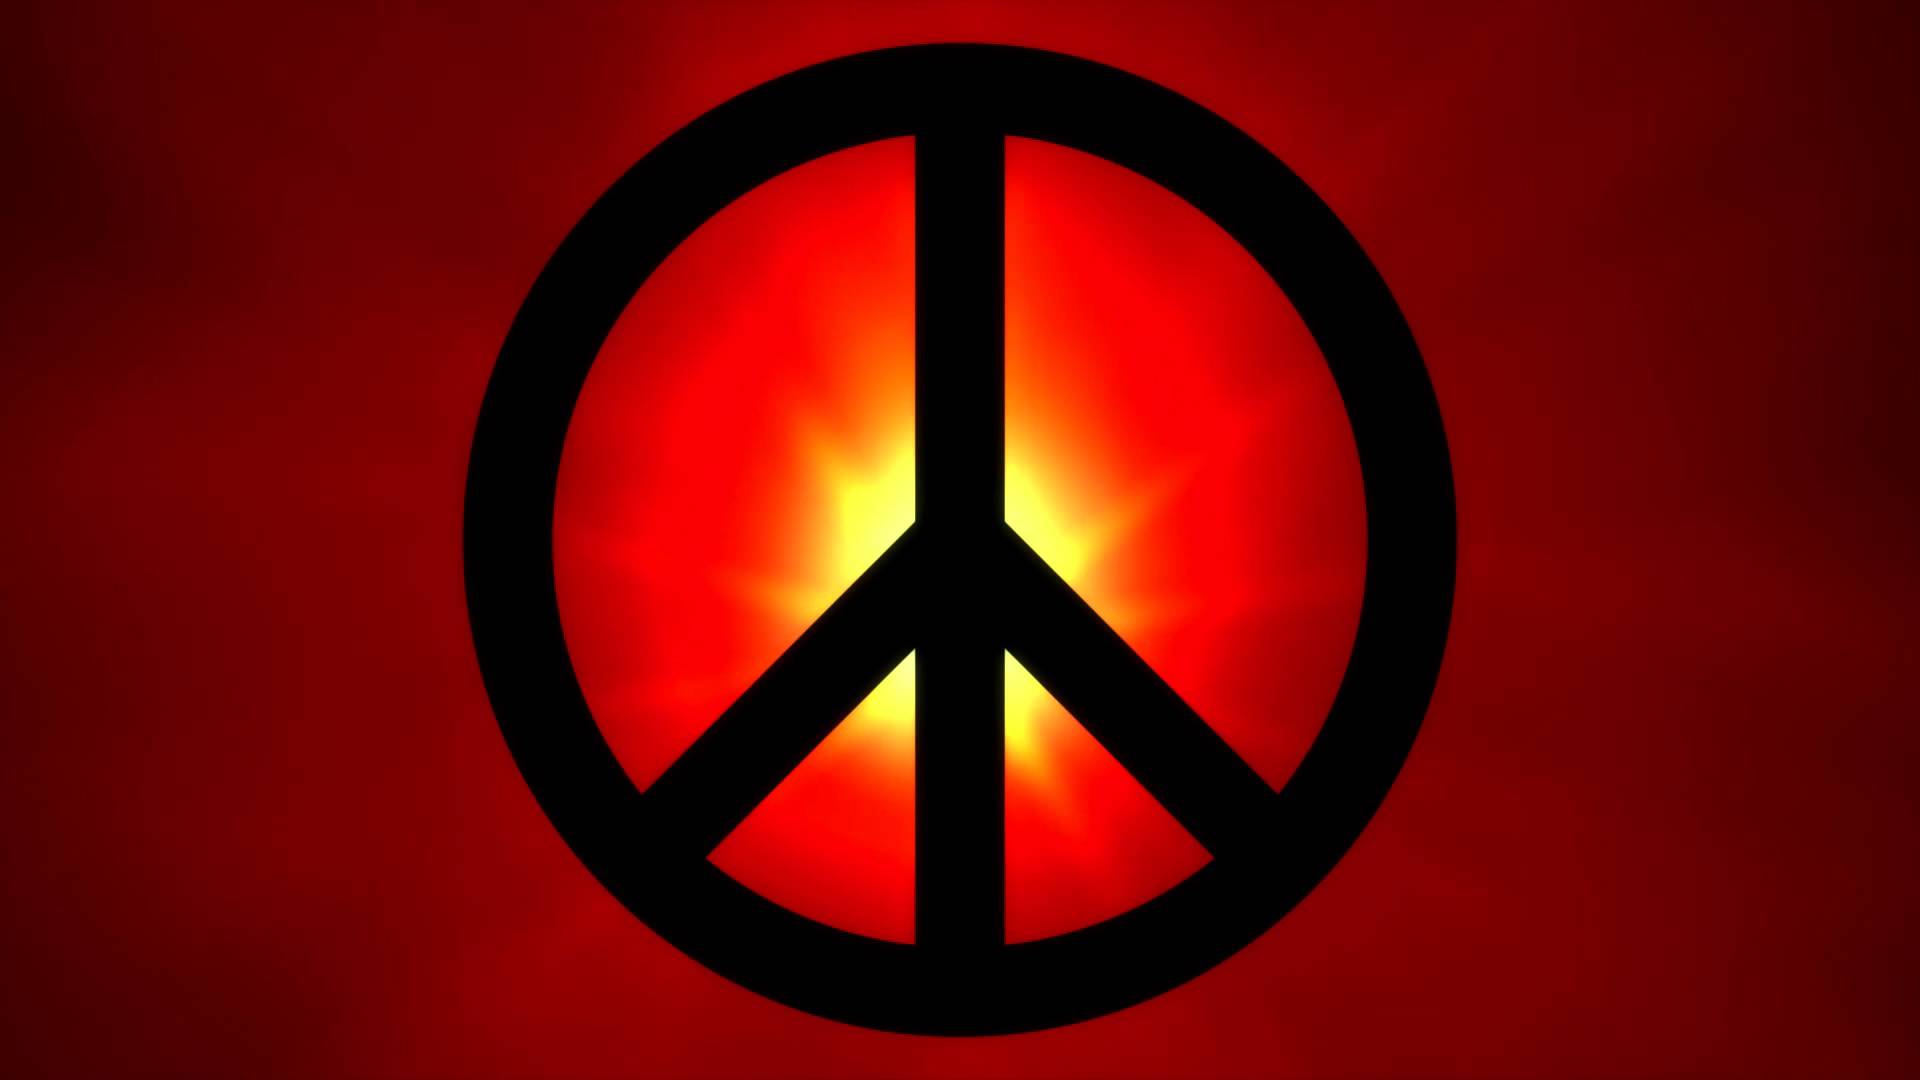 peace wallpaper hd,red,orange,symbol,peace symbols,circle